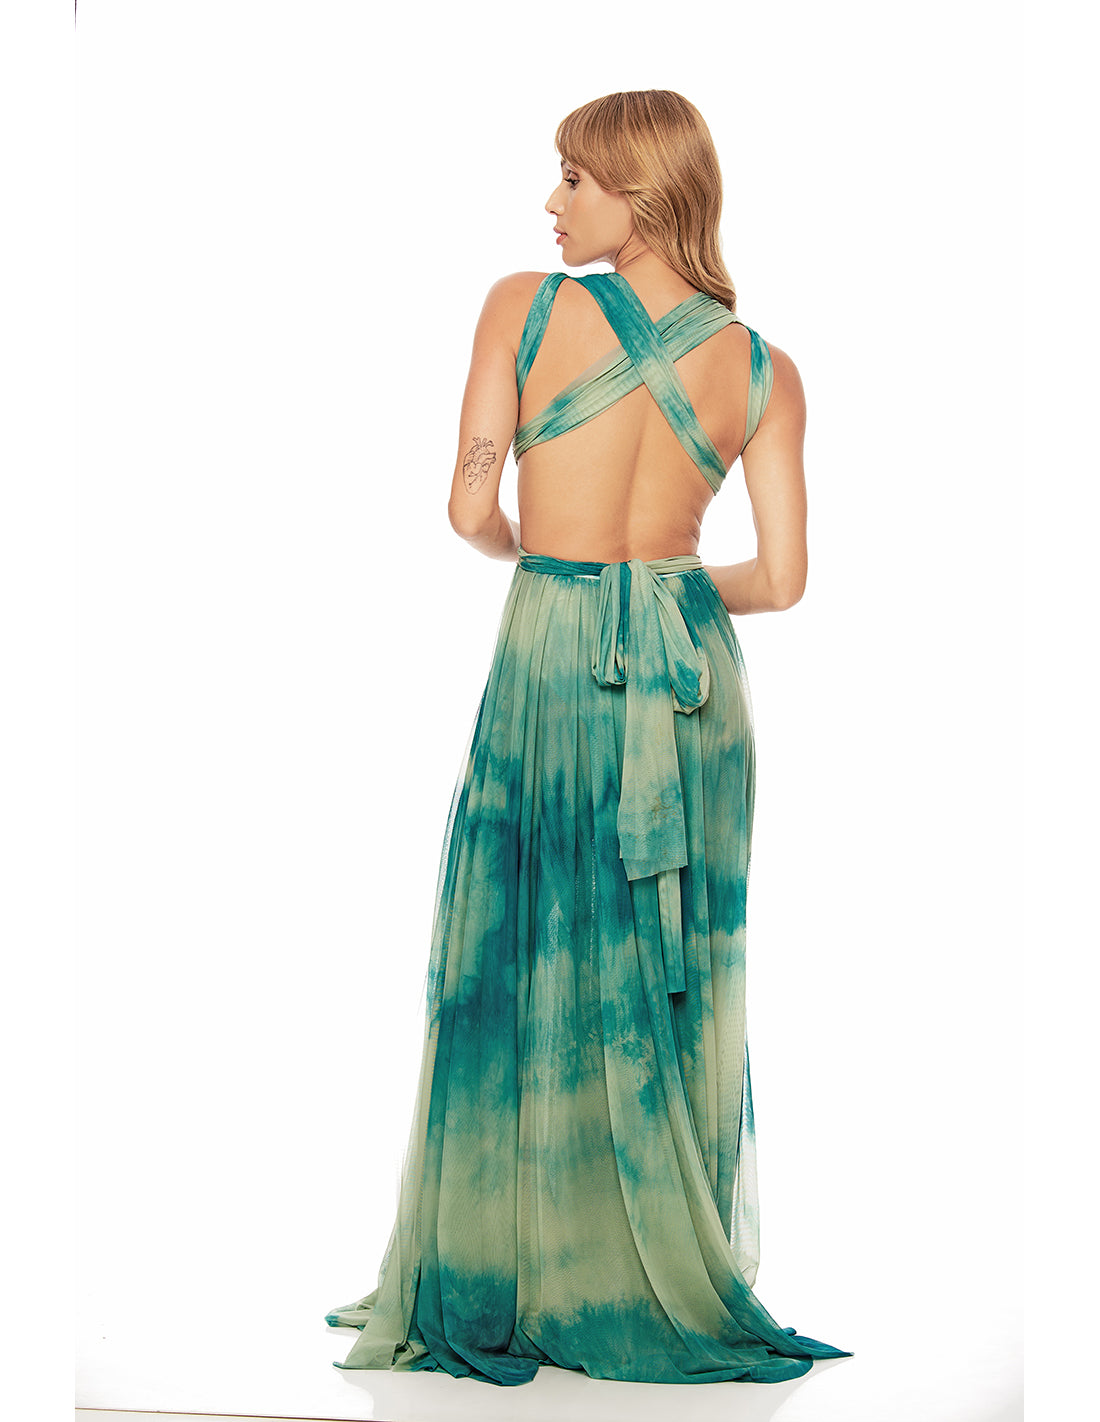 Hydra Dress Aqua Stain. Hand-Dyed Dress In Aqua Stain. Entreaguas